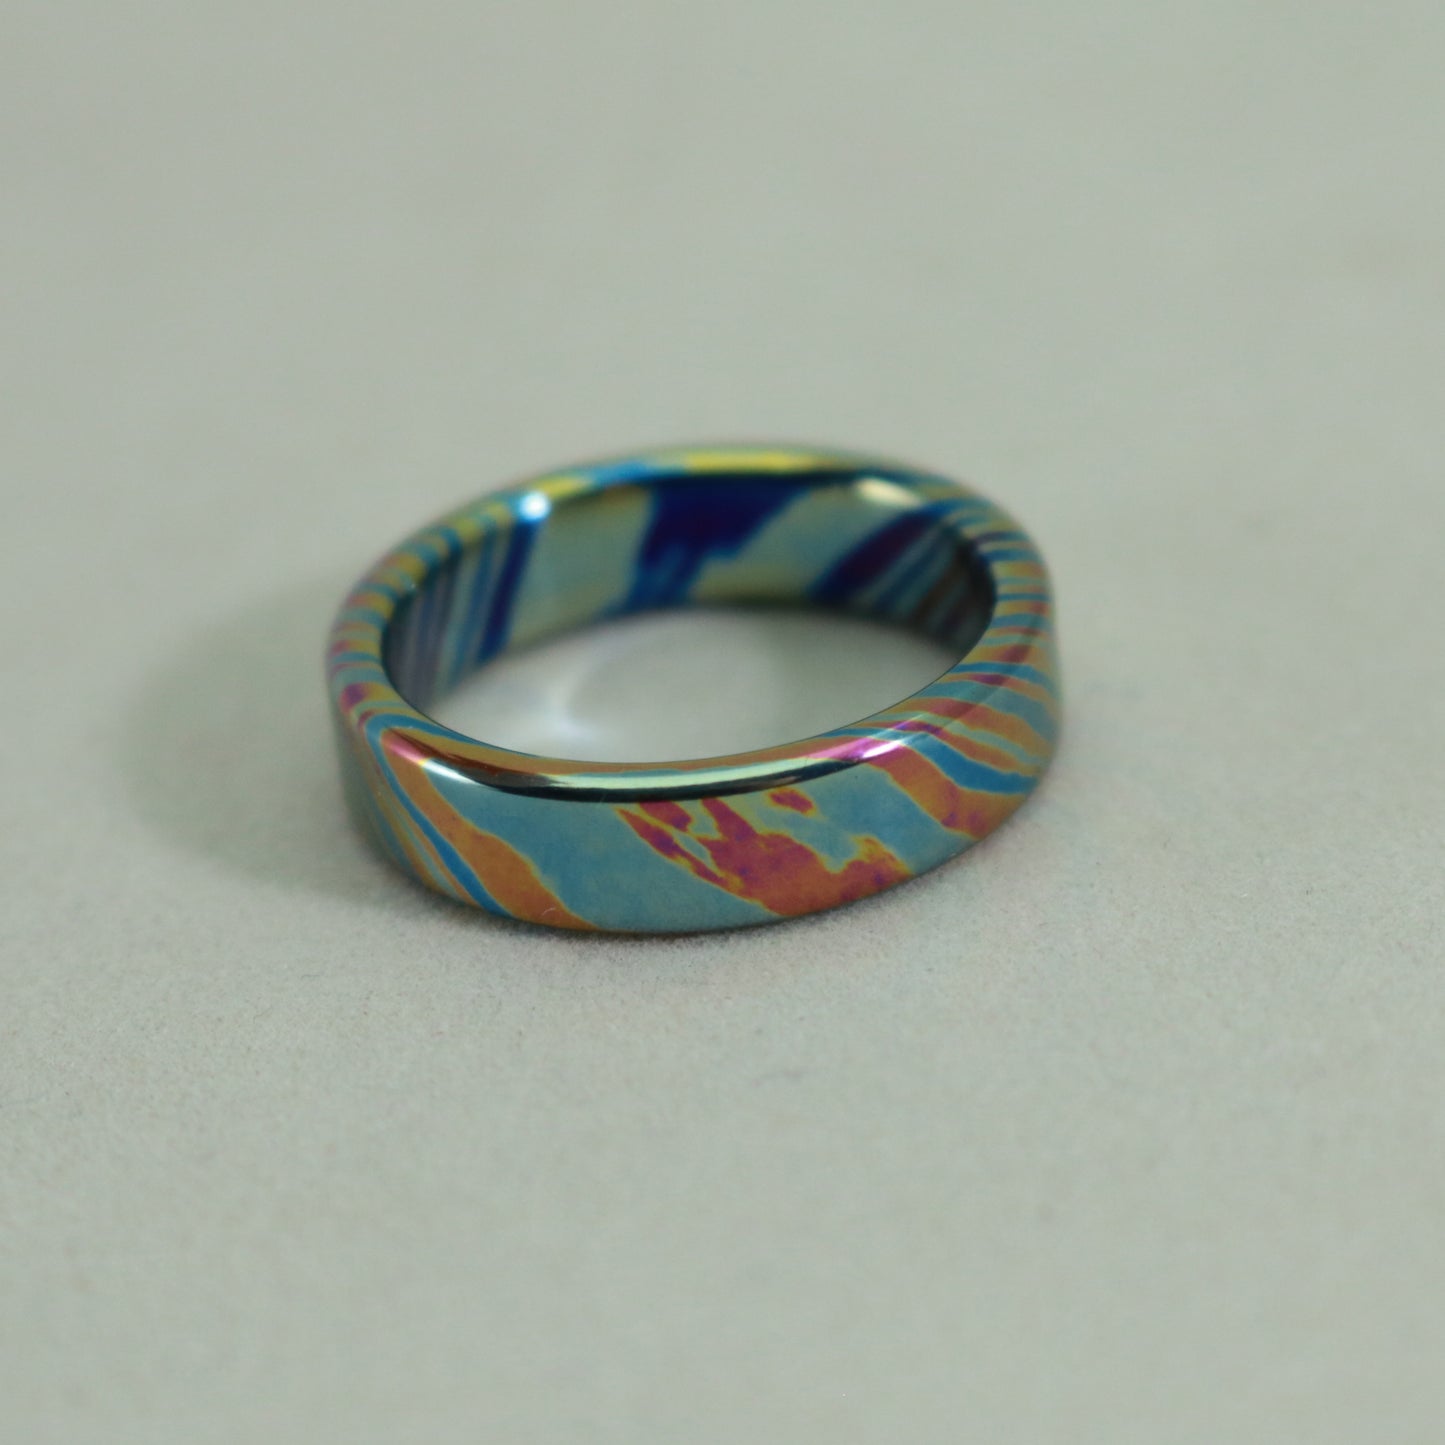 4 Alloy TwisTi Titanium Ring - size 7 1/4 (Light Colors)